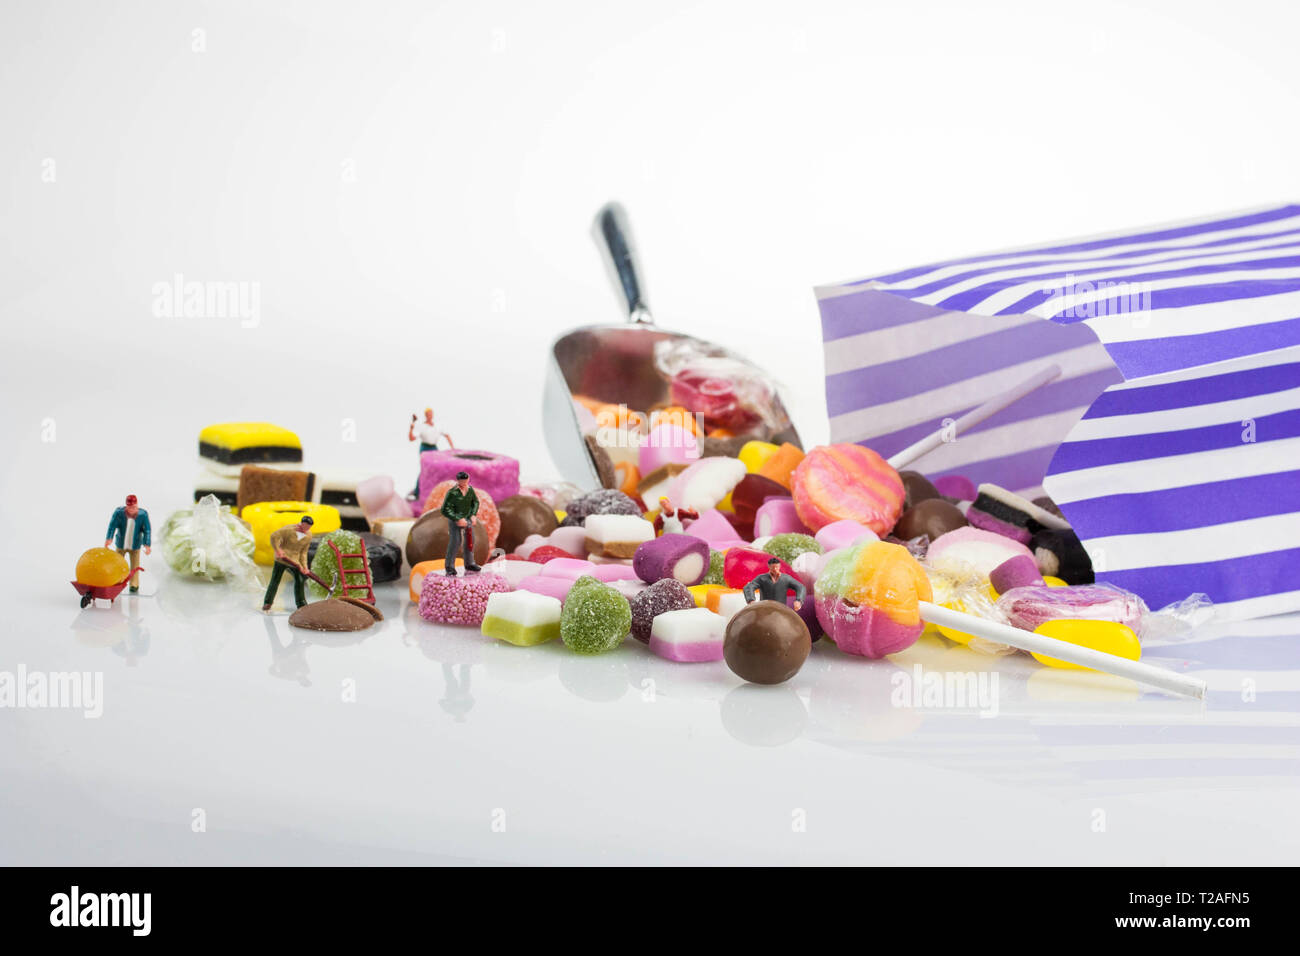 Miniature people - Sweet selection Stock Photo